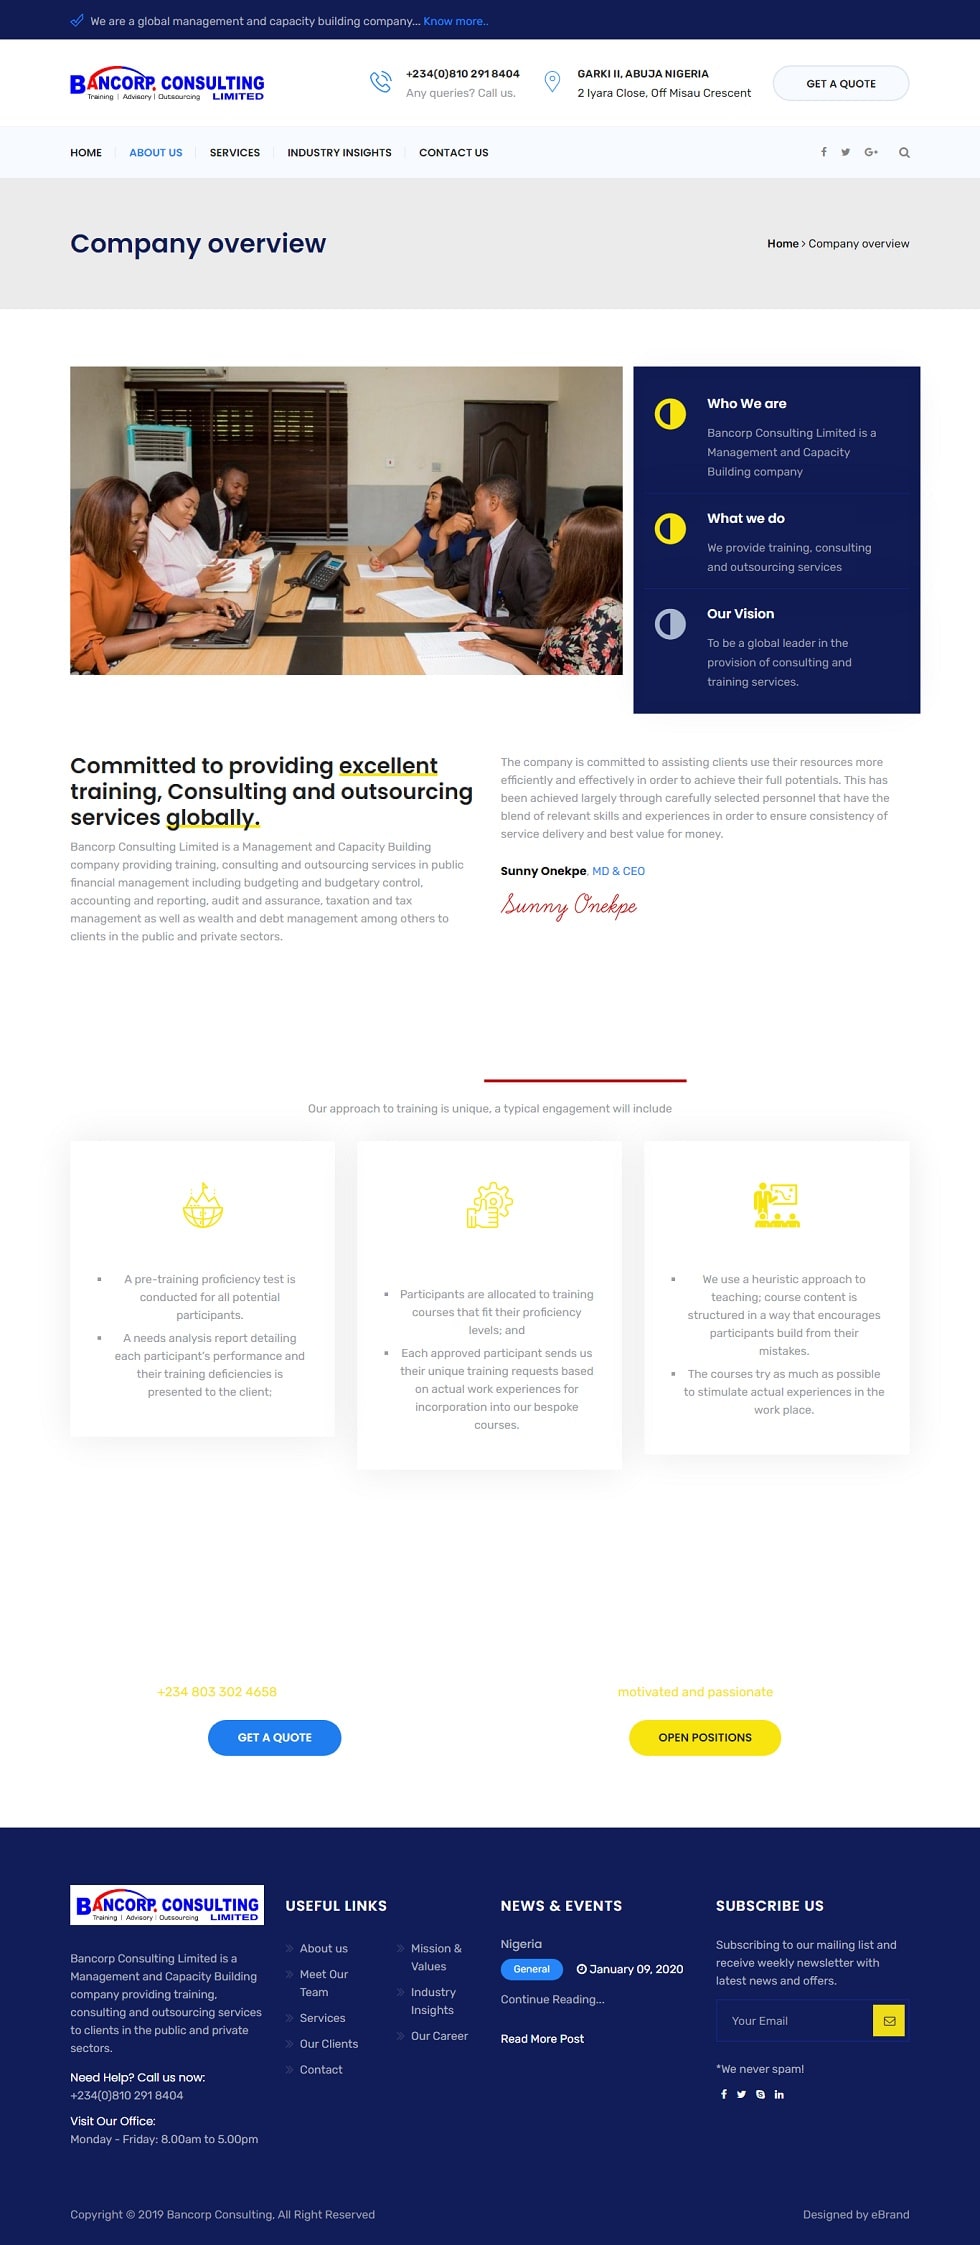 Bancorp Abuja web design